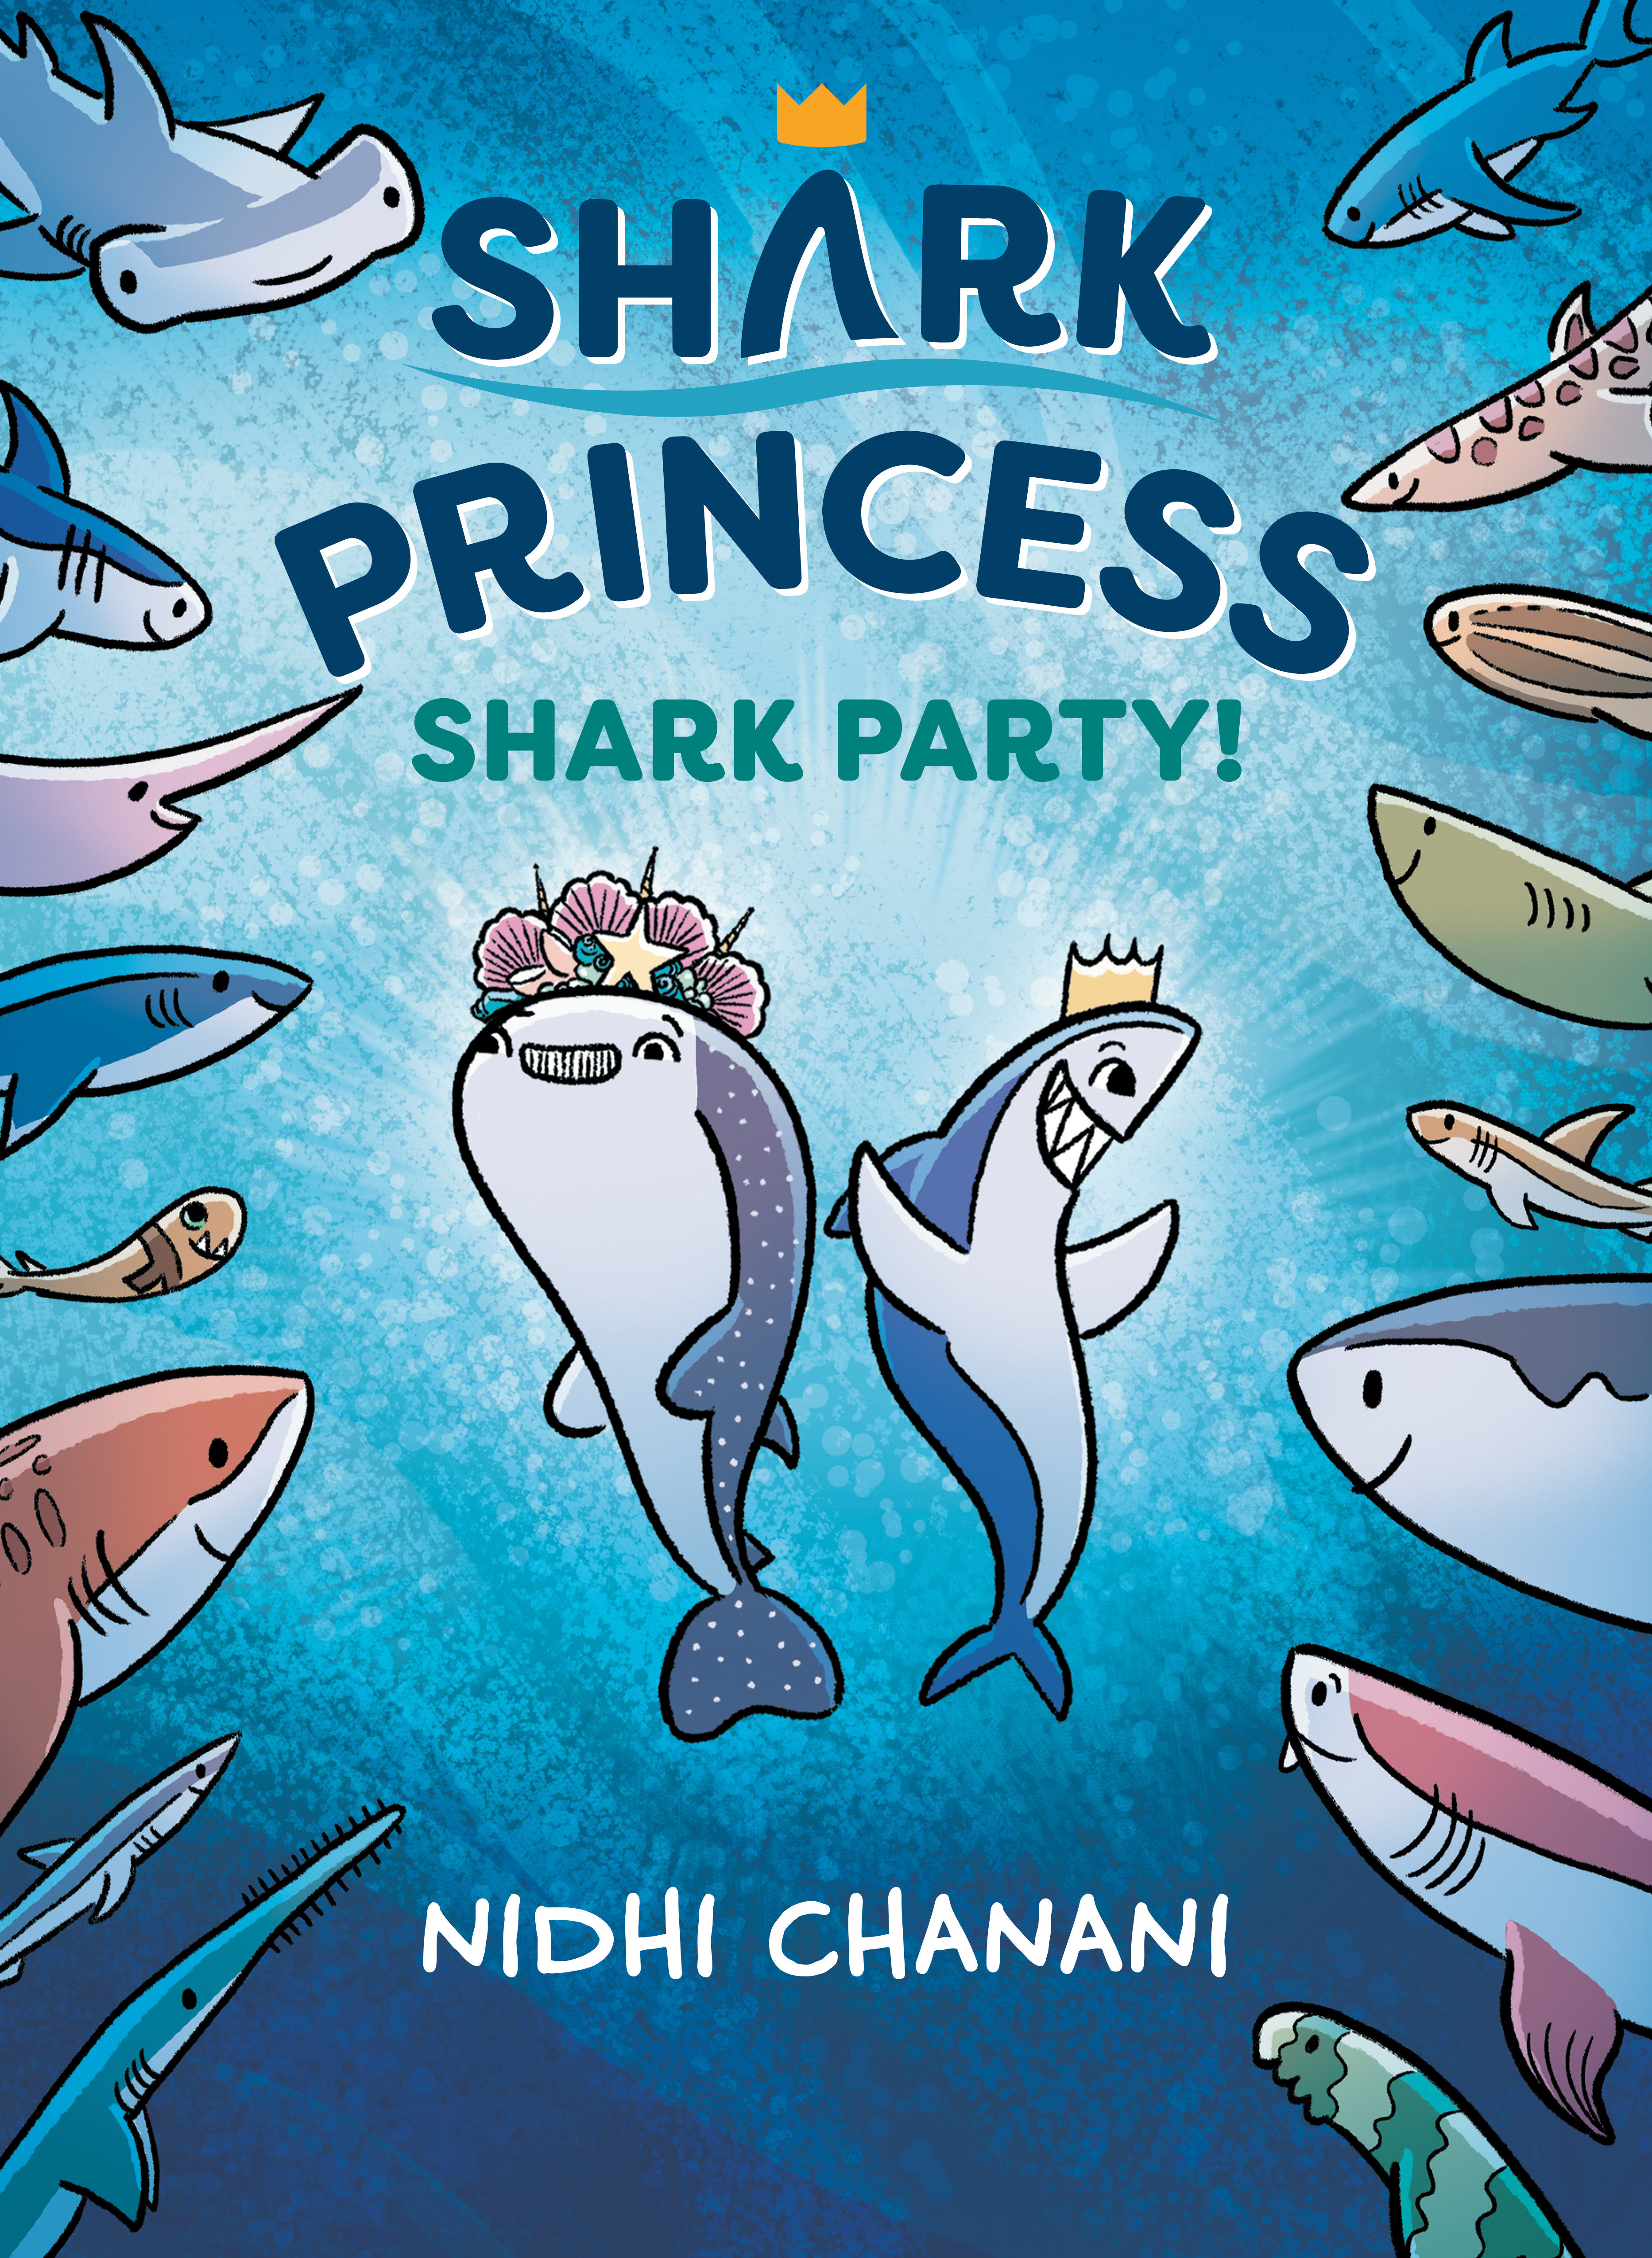 Shark Princess Hardcover Graphic Novel Volume 2 Shark Party